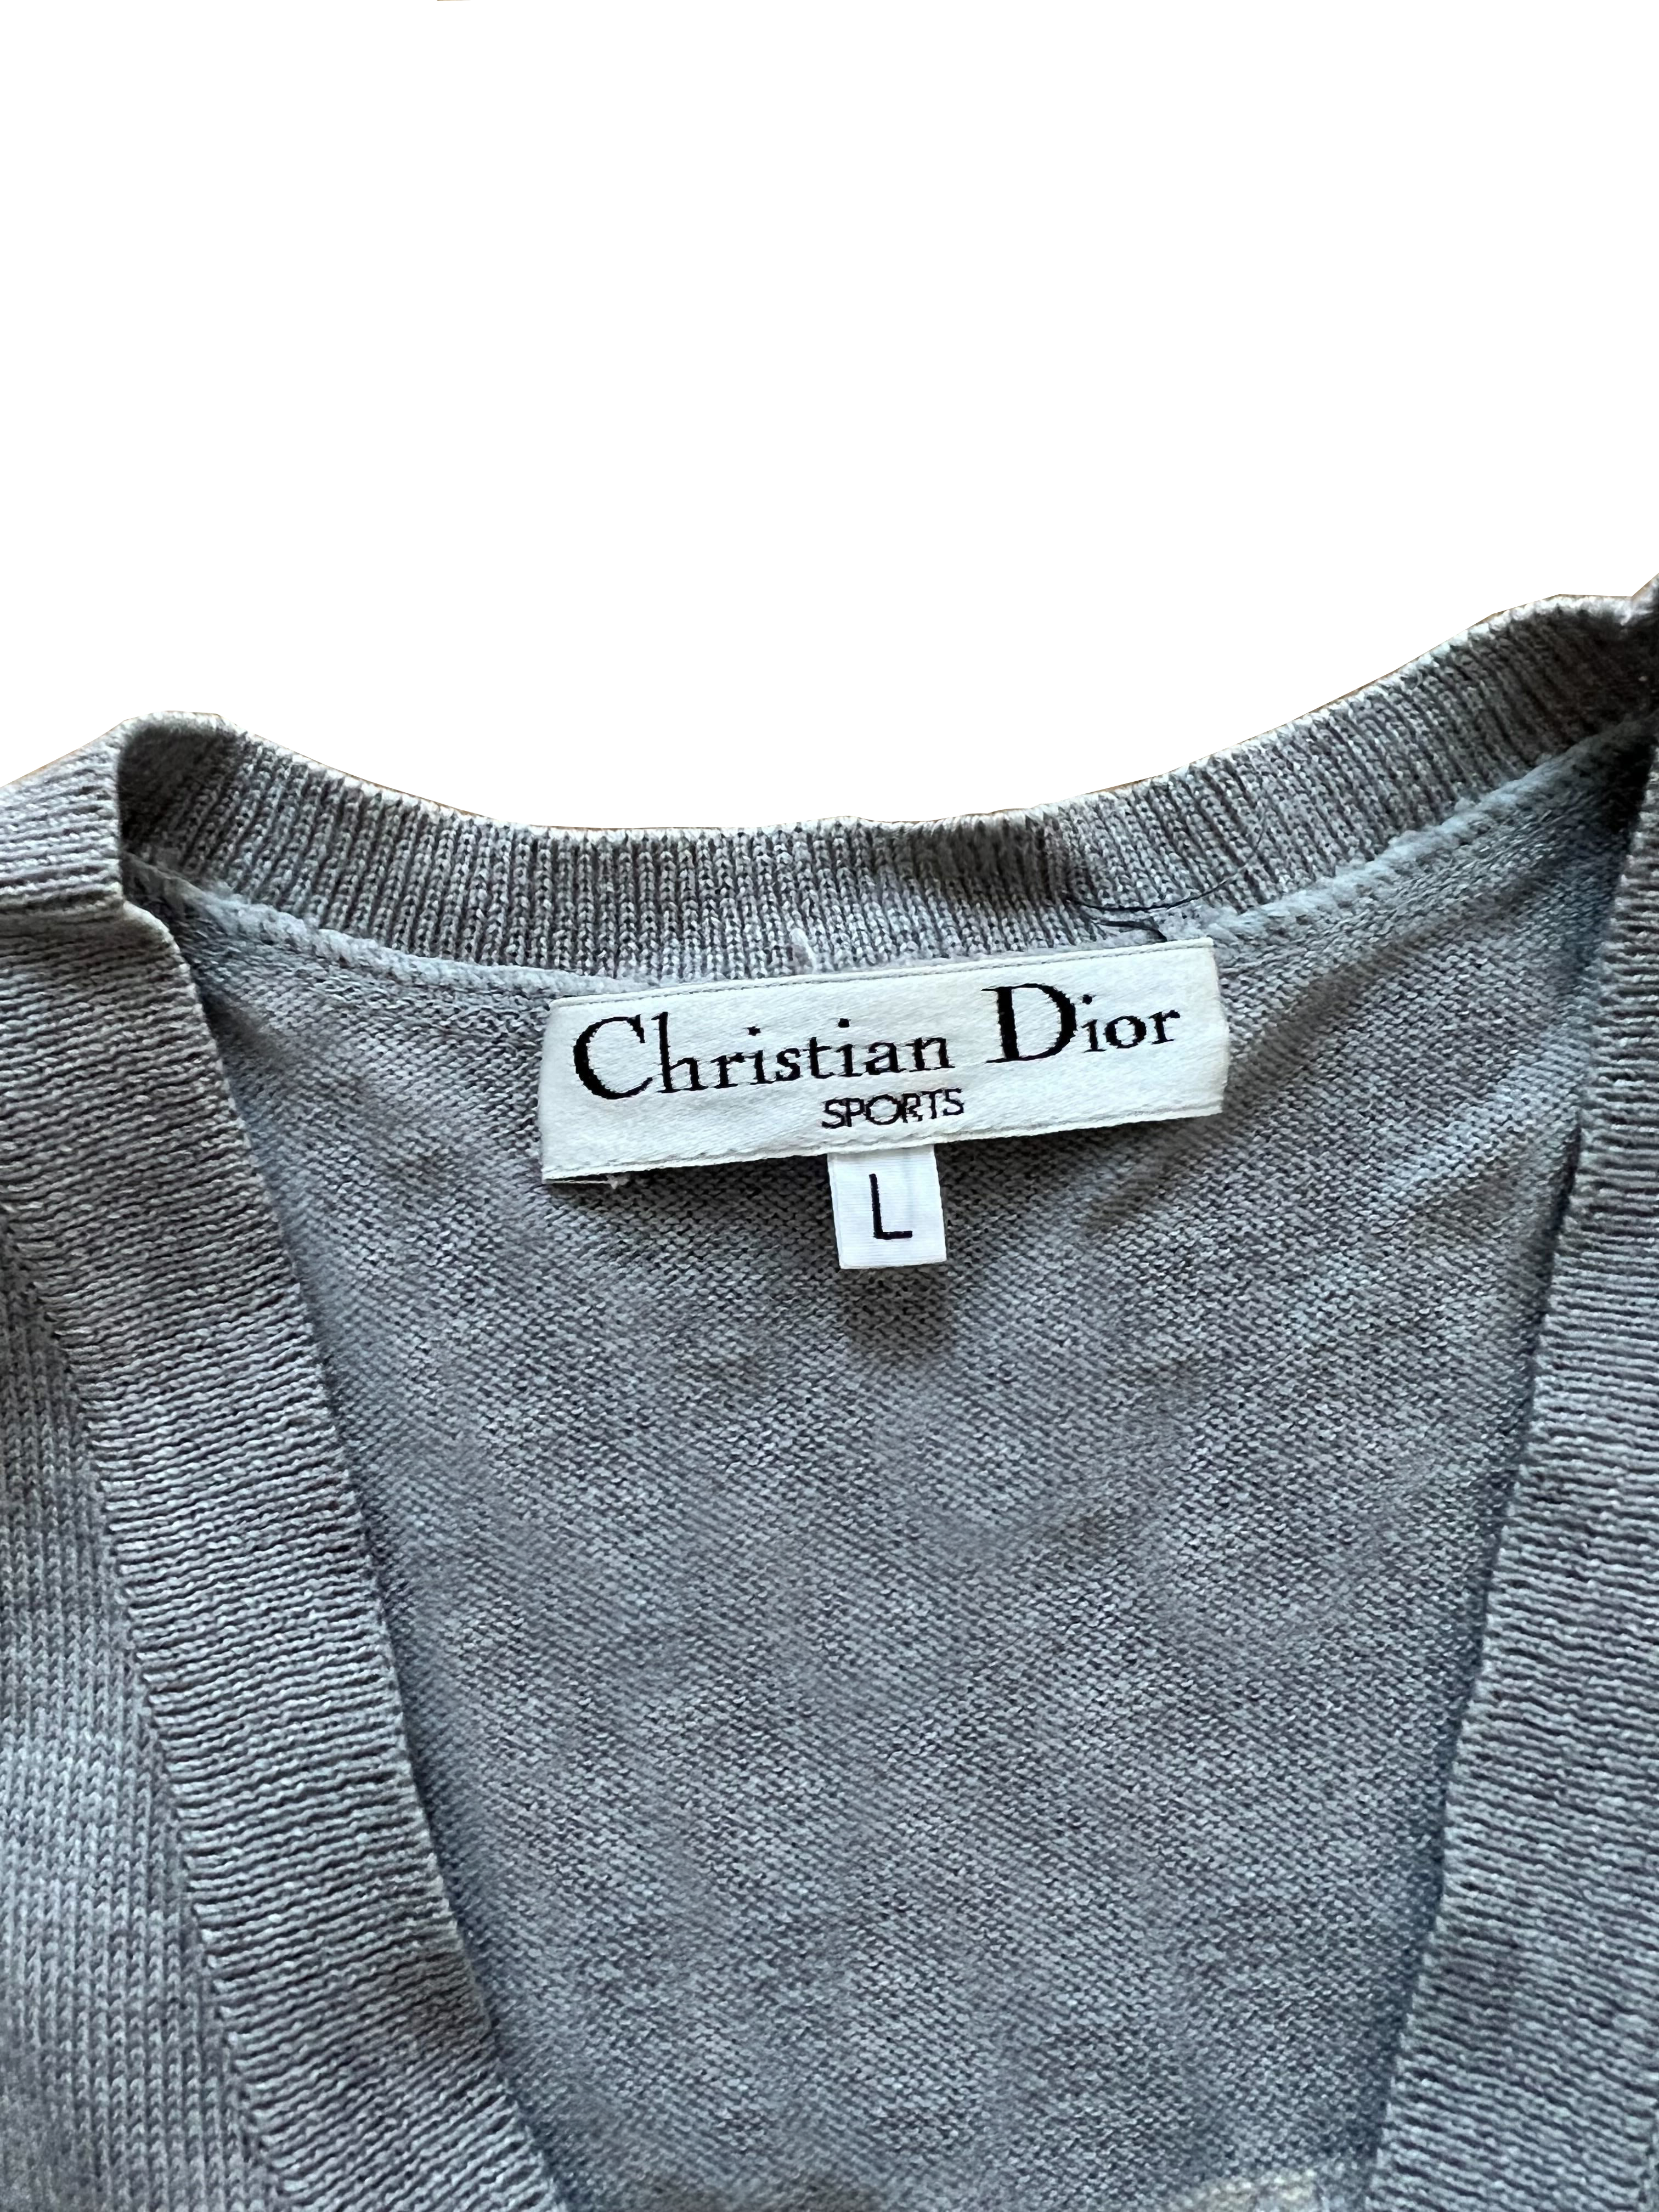 Christian Dior 1990s CD Sports Grey Checkered Cardigan